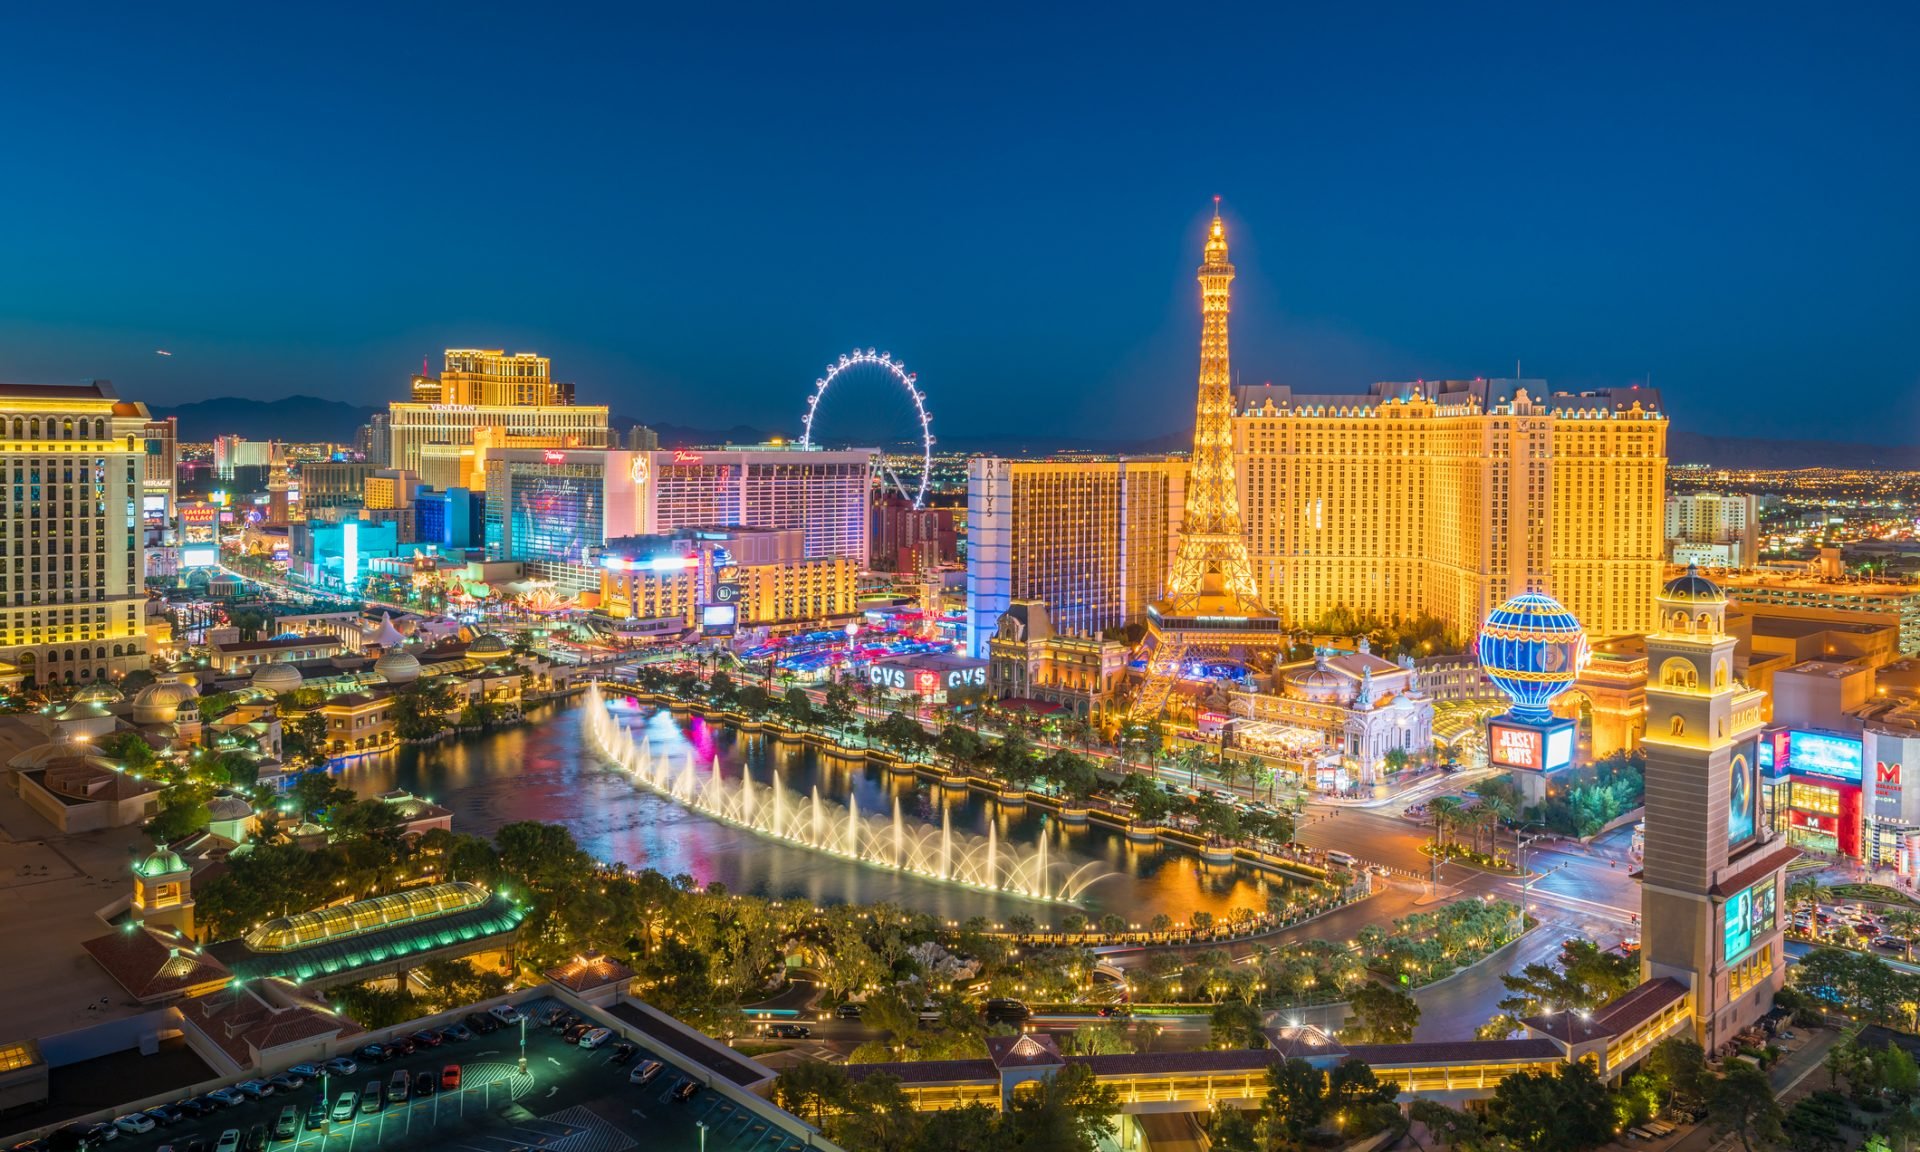 The Best Las Vegas Hotels Without Resort Fees - NerdWallet